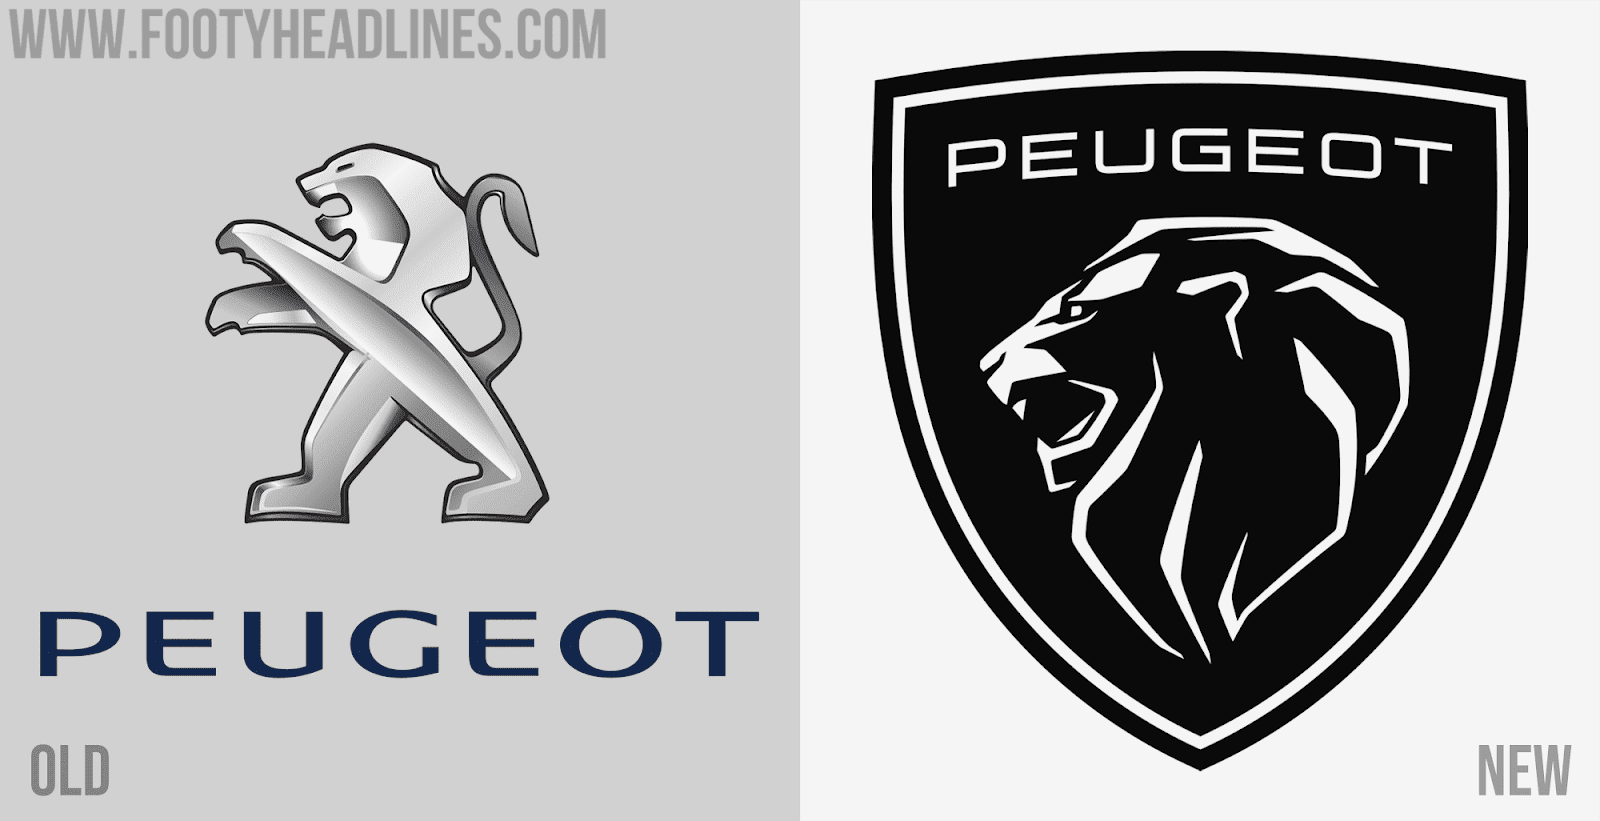 Peugeot has a new logo